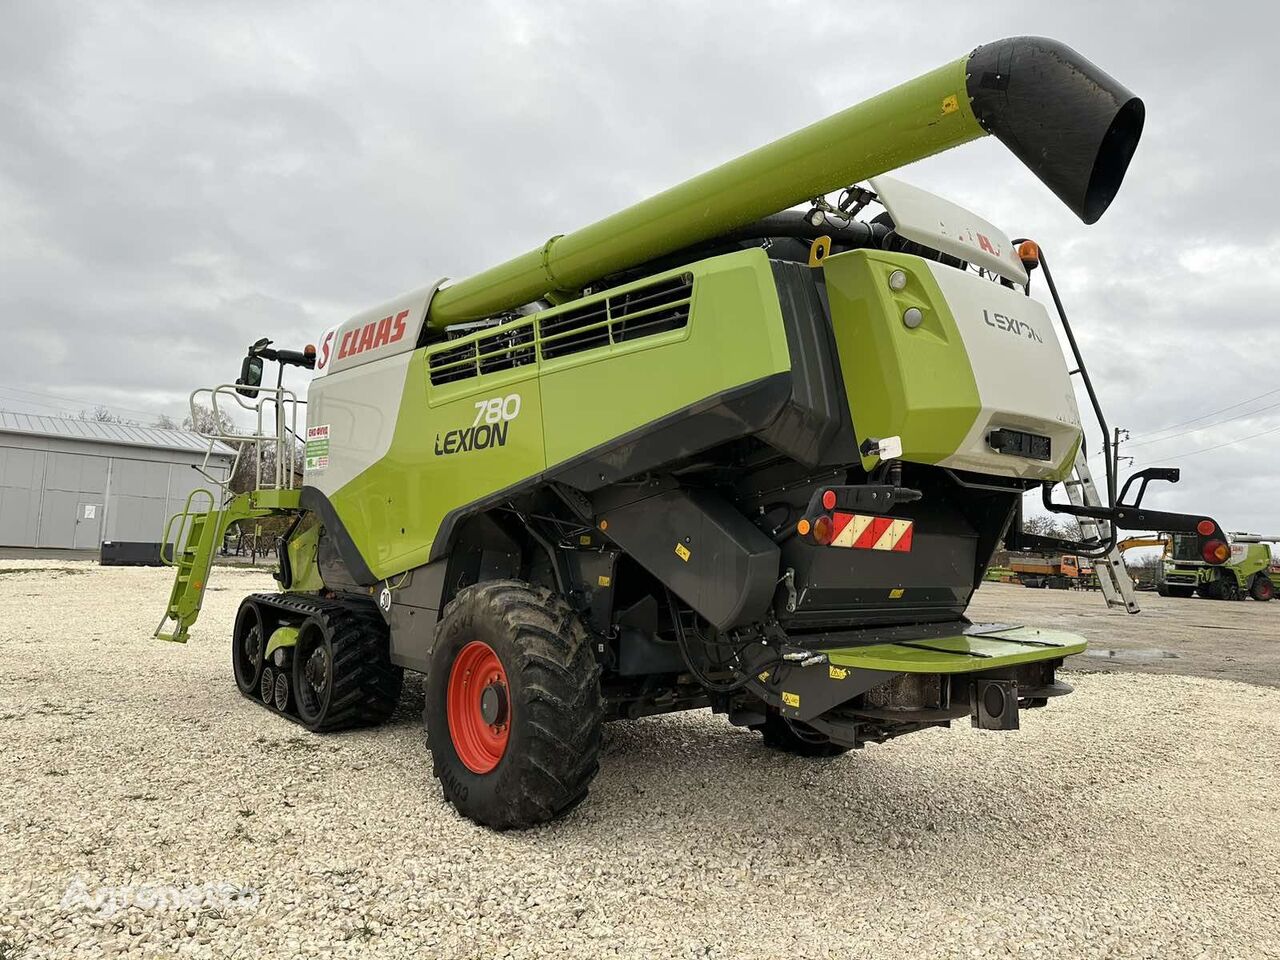 Claas Lexion 780 grain harvester